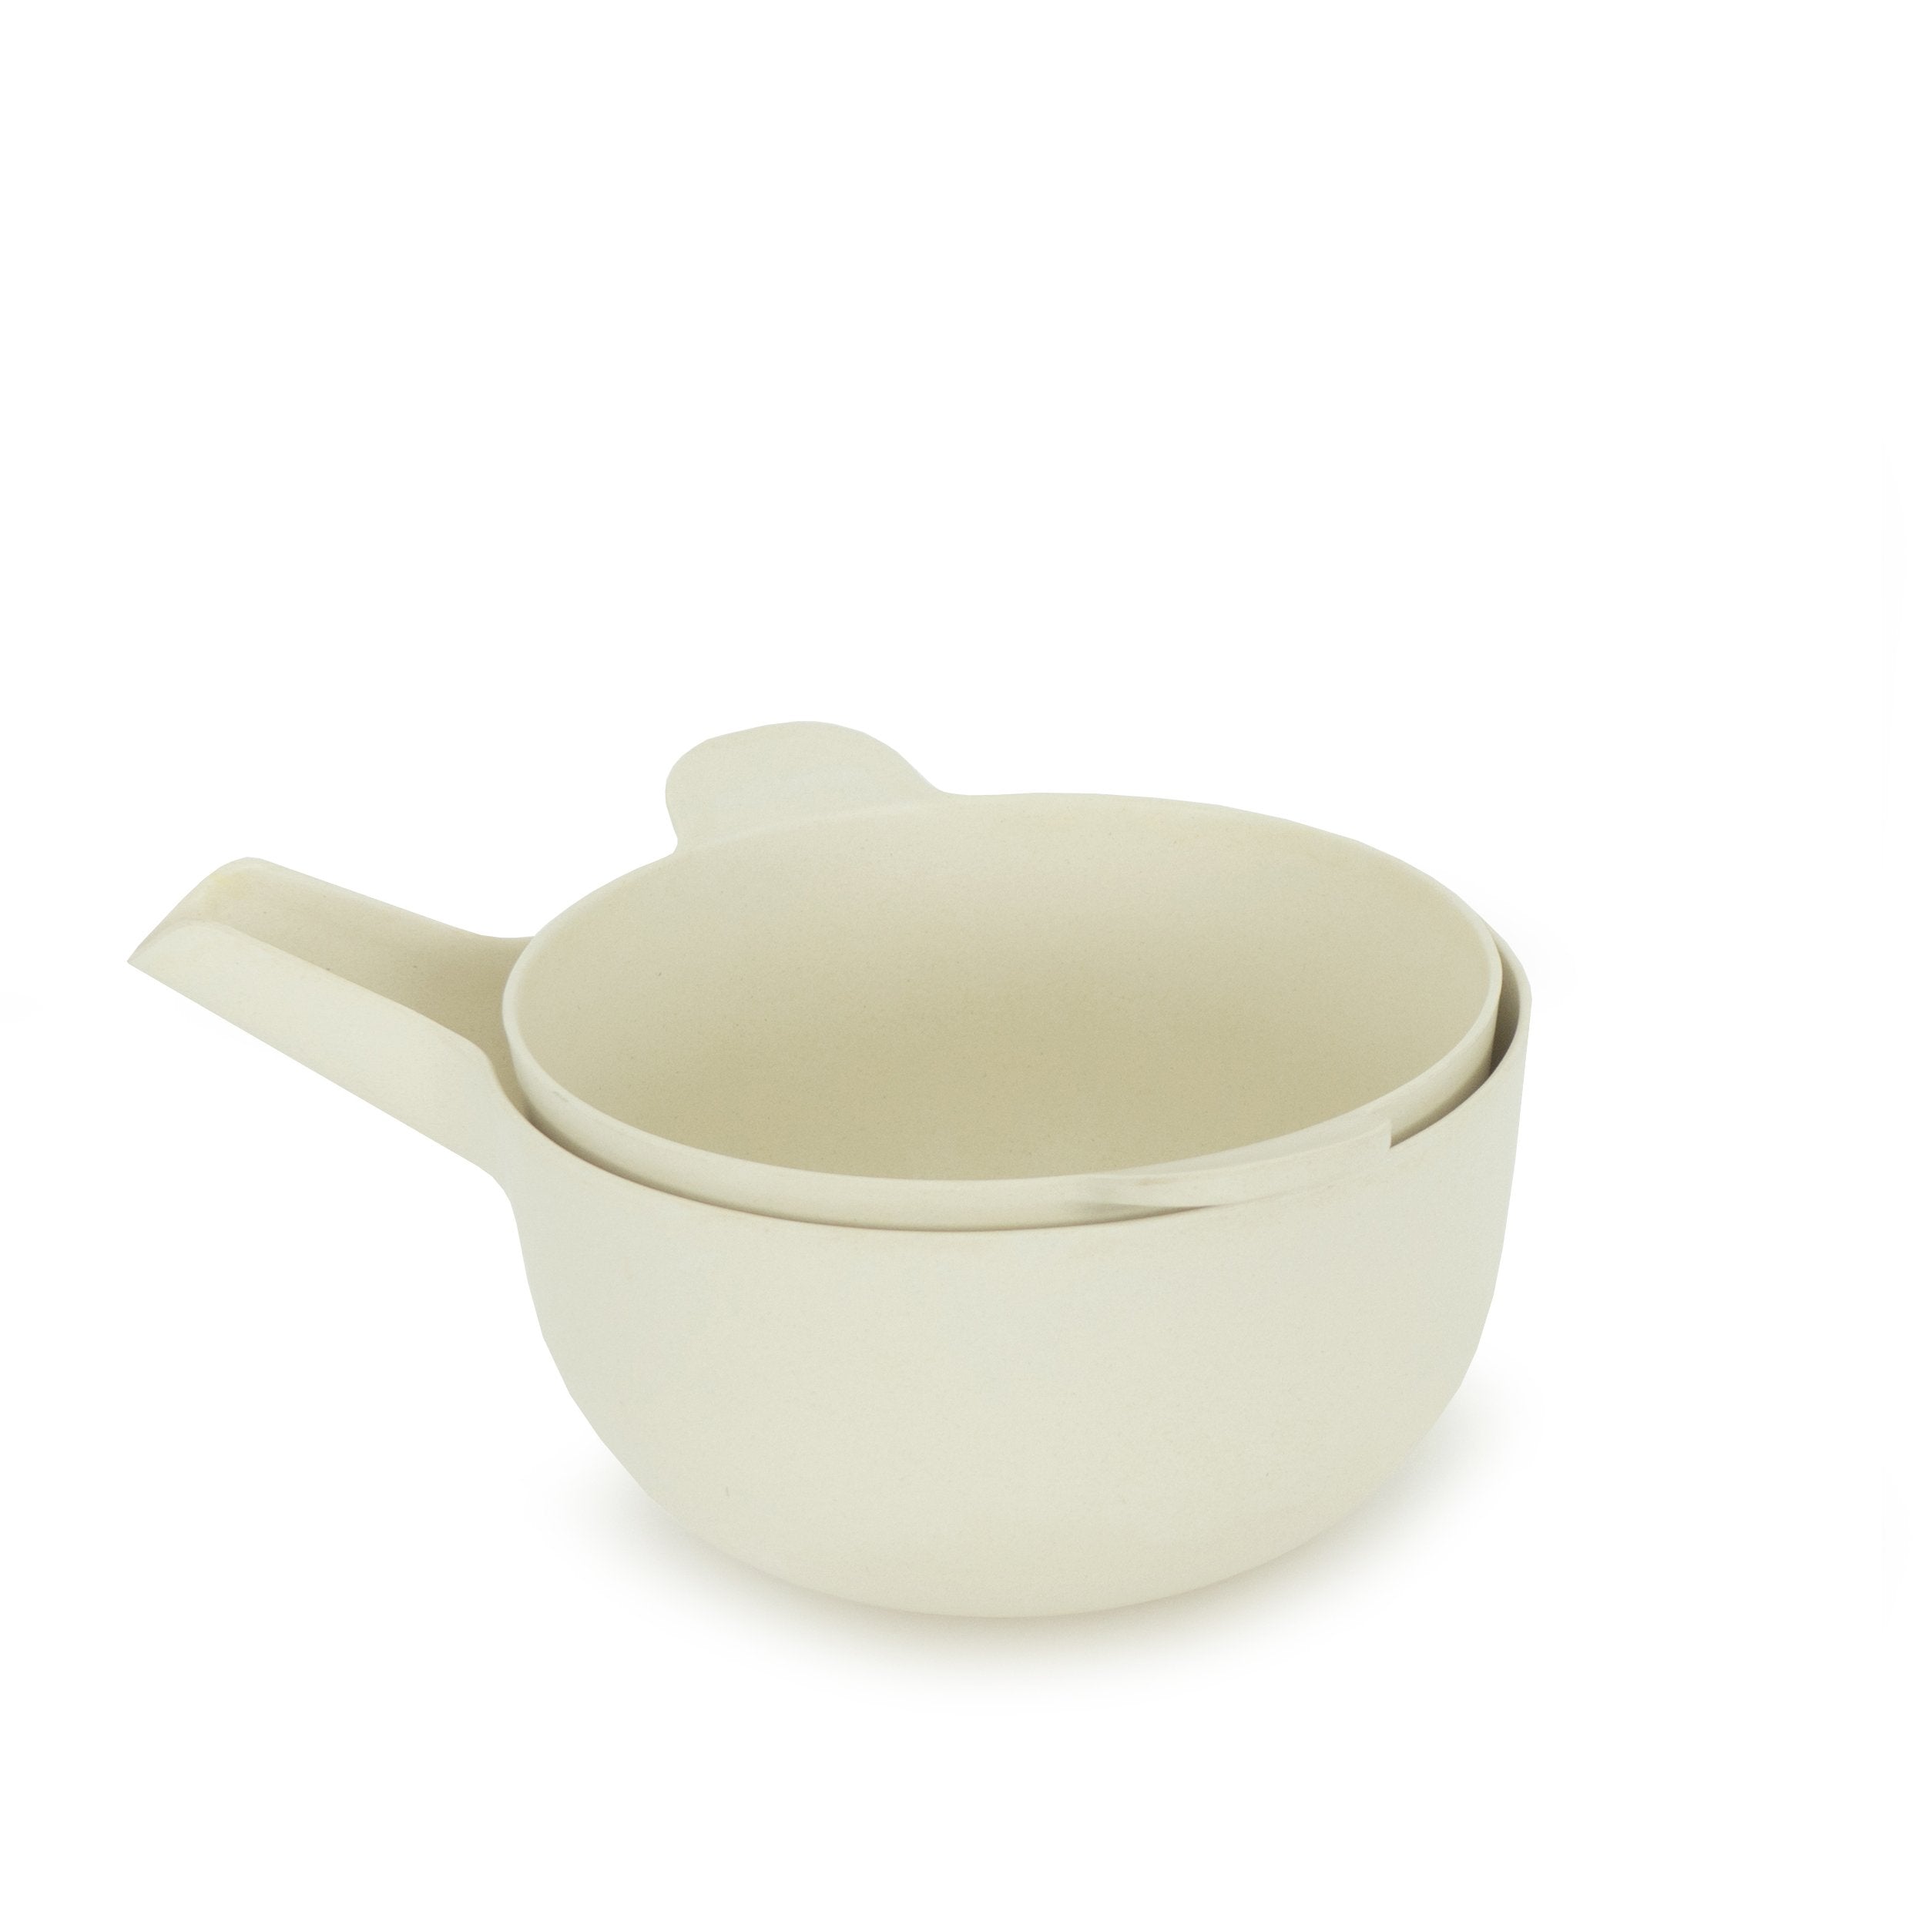 EKOBO - Pronto Small Handy Bowl and Colander Set - Lemon